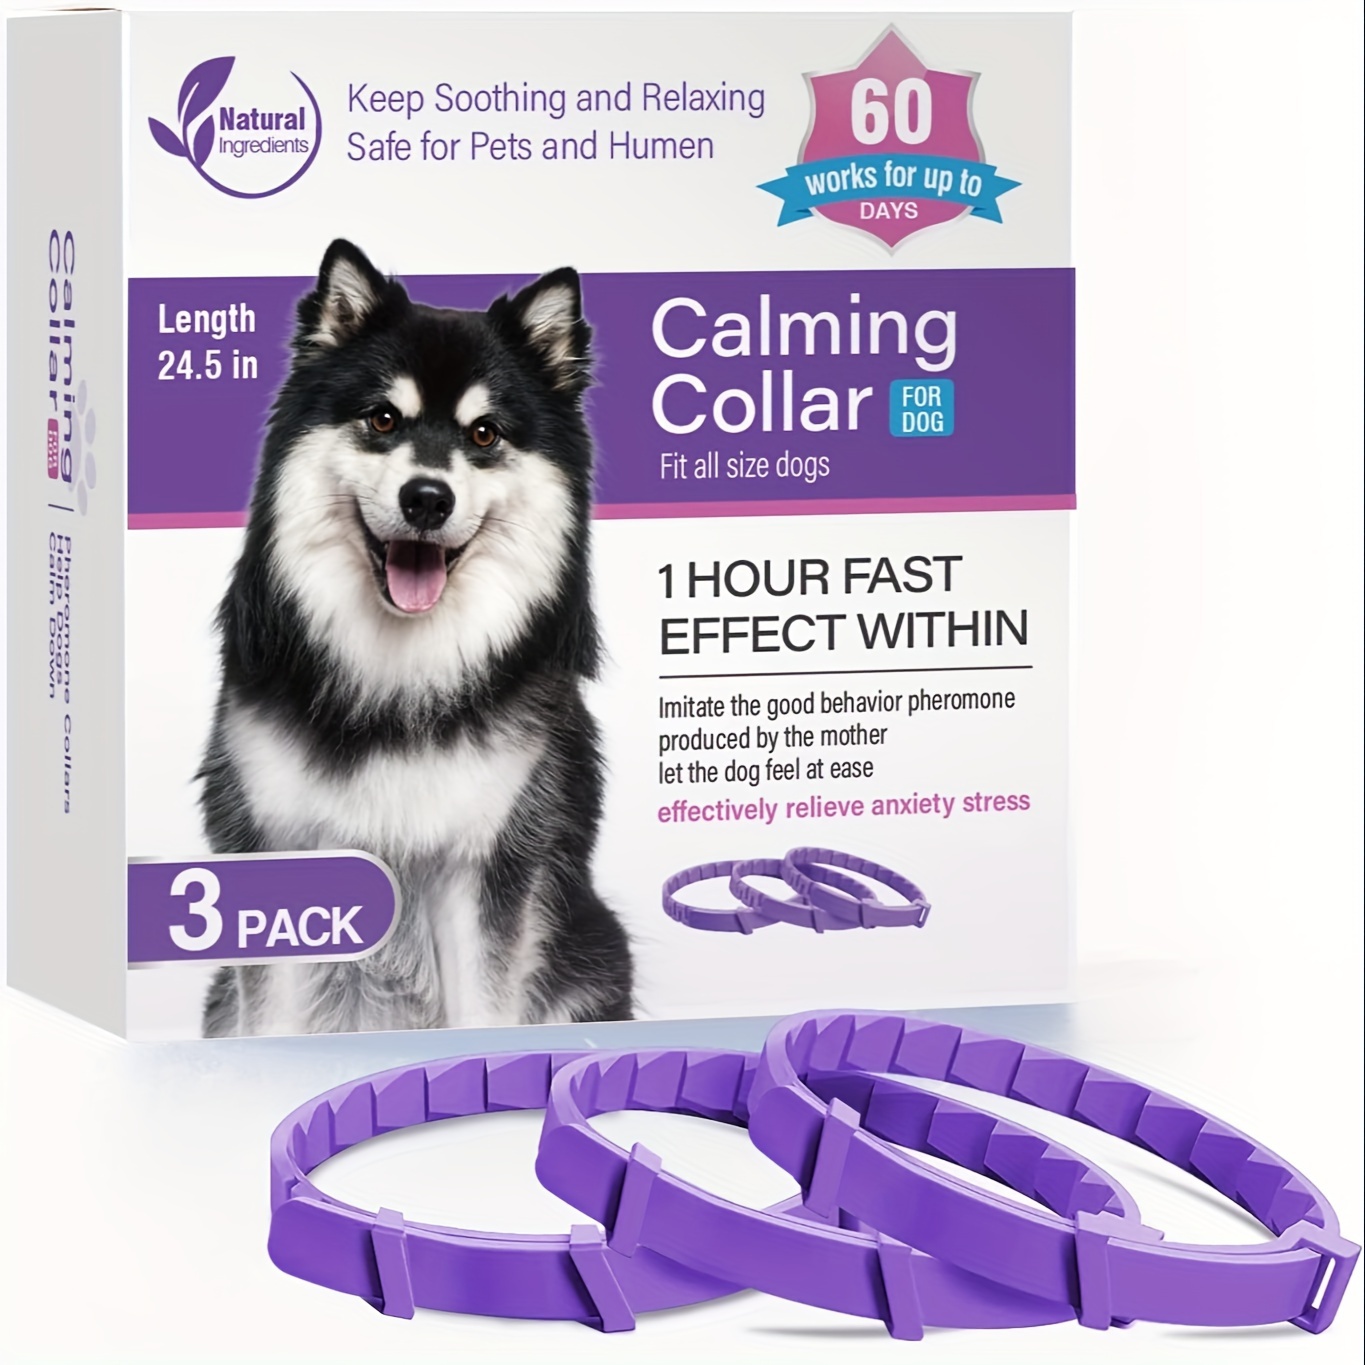 Sentry Calming Collar para gatos Pack 1 pack